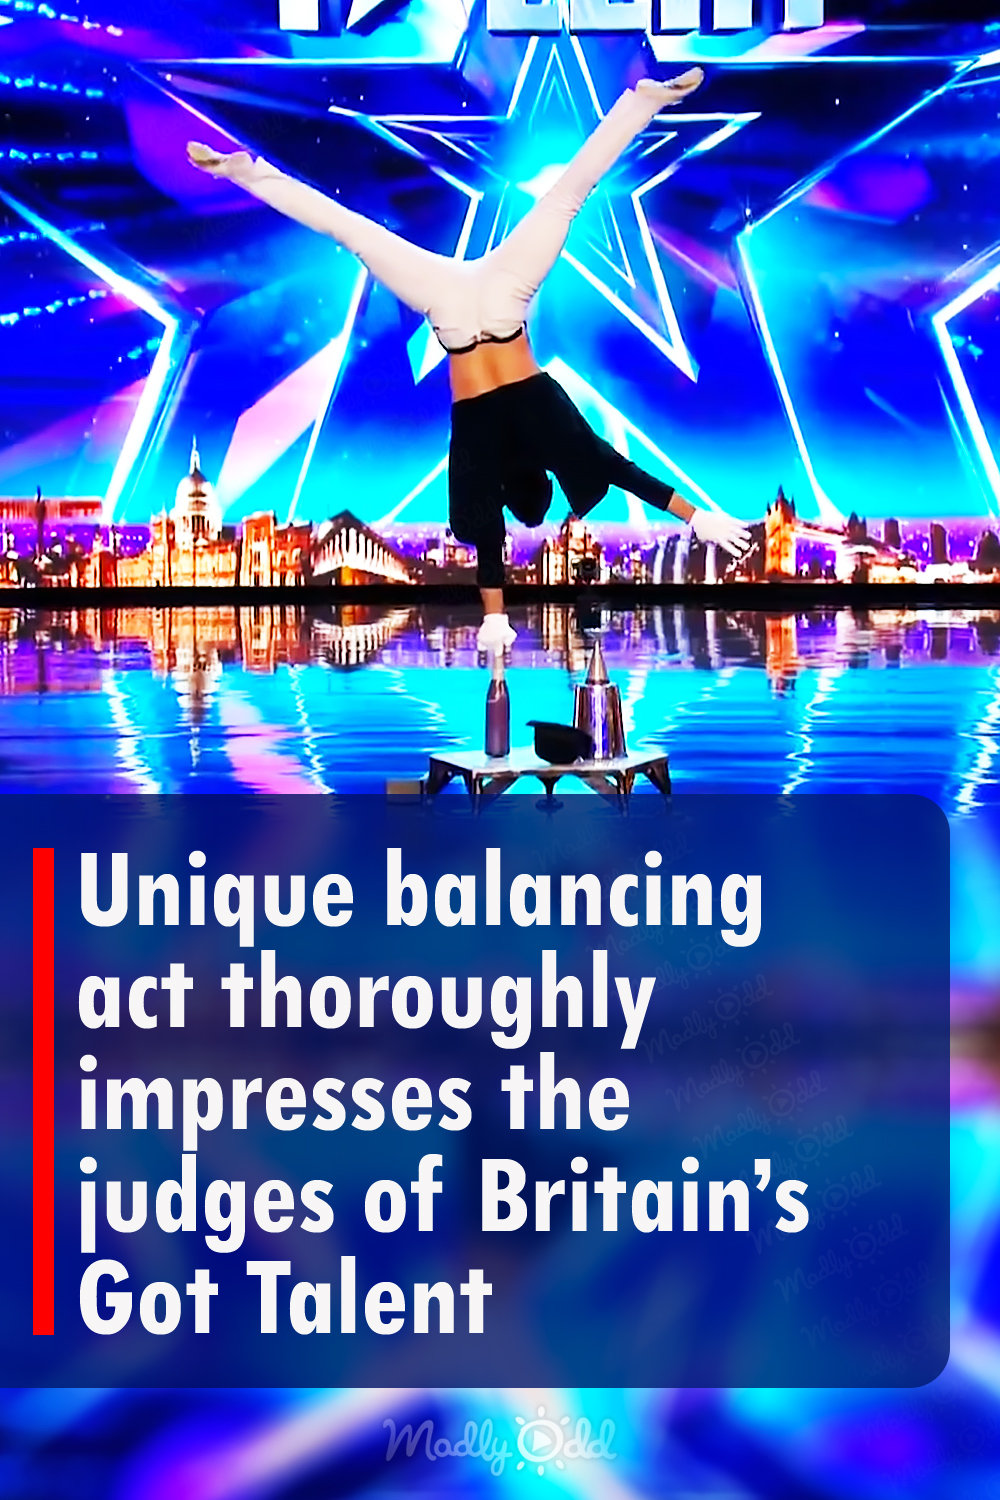 Unique balancing act thoroughly impresses the judges of Britain’s Got Talent